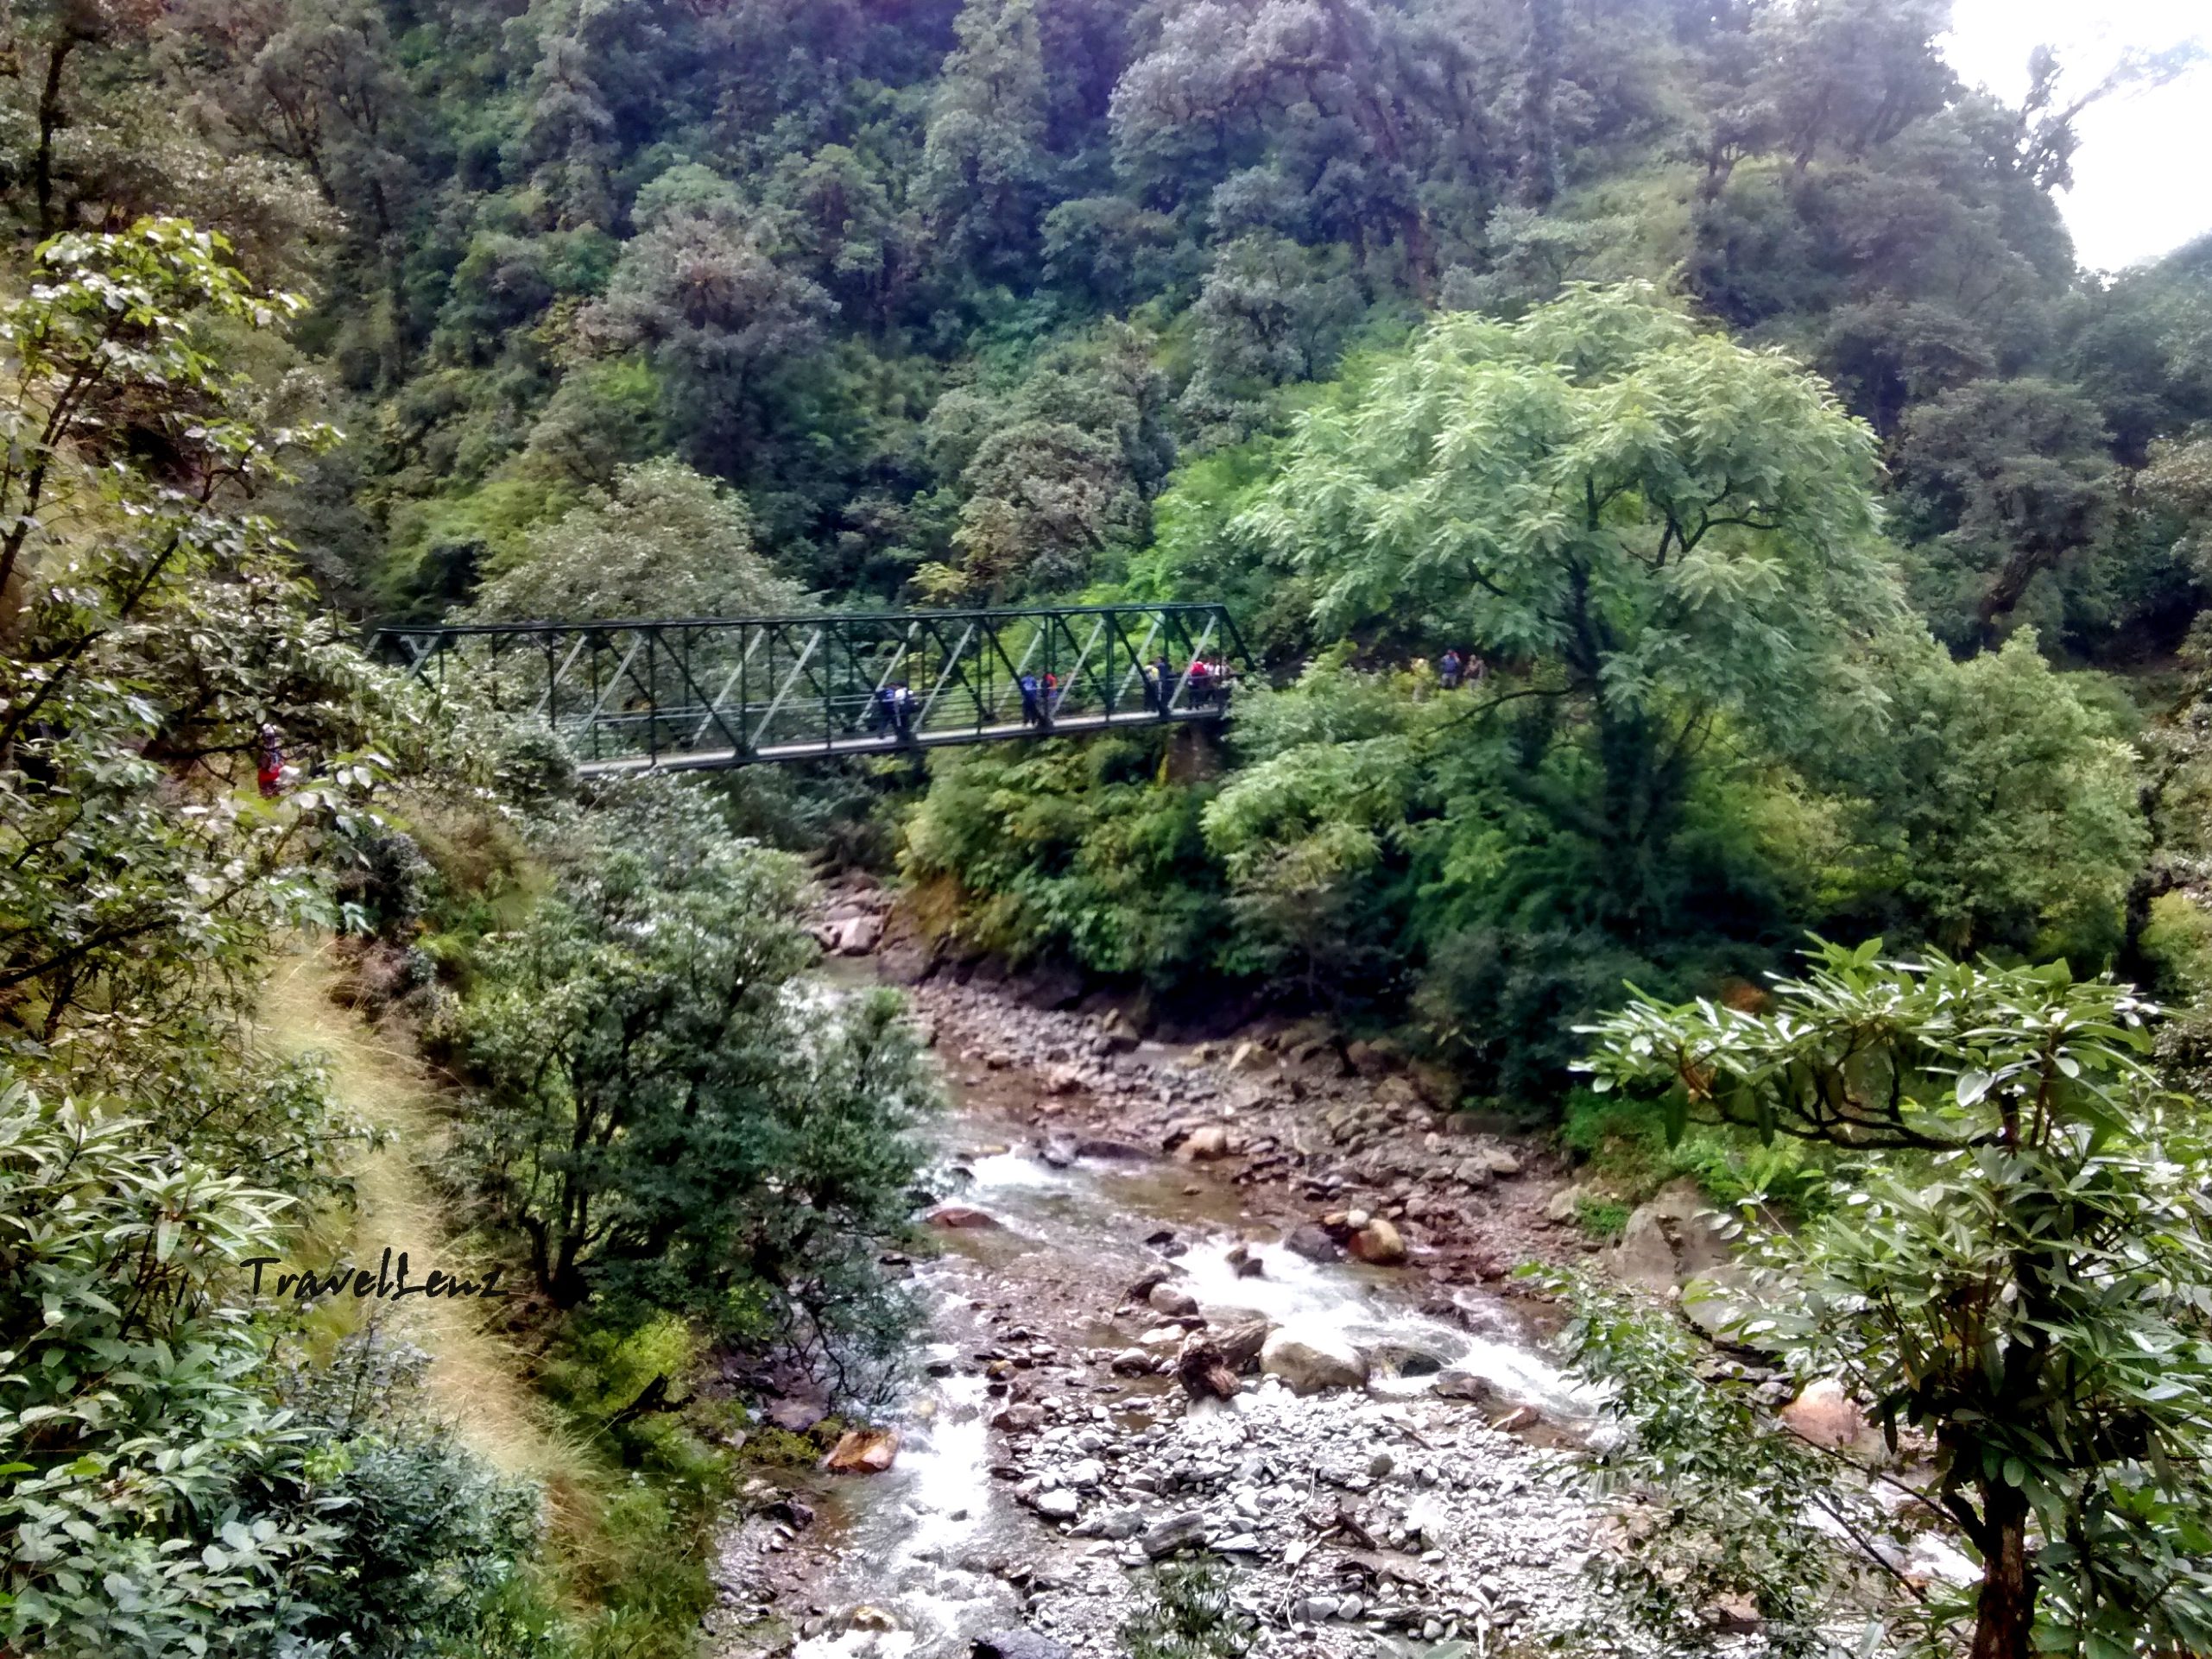 The Raun Bagad metal bridge across a small brook